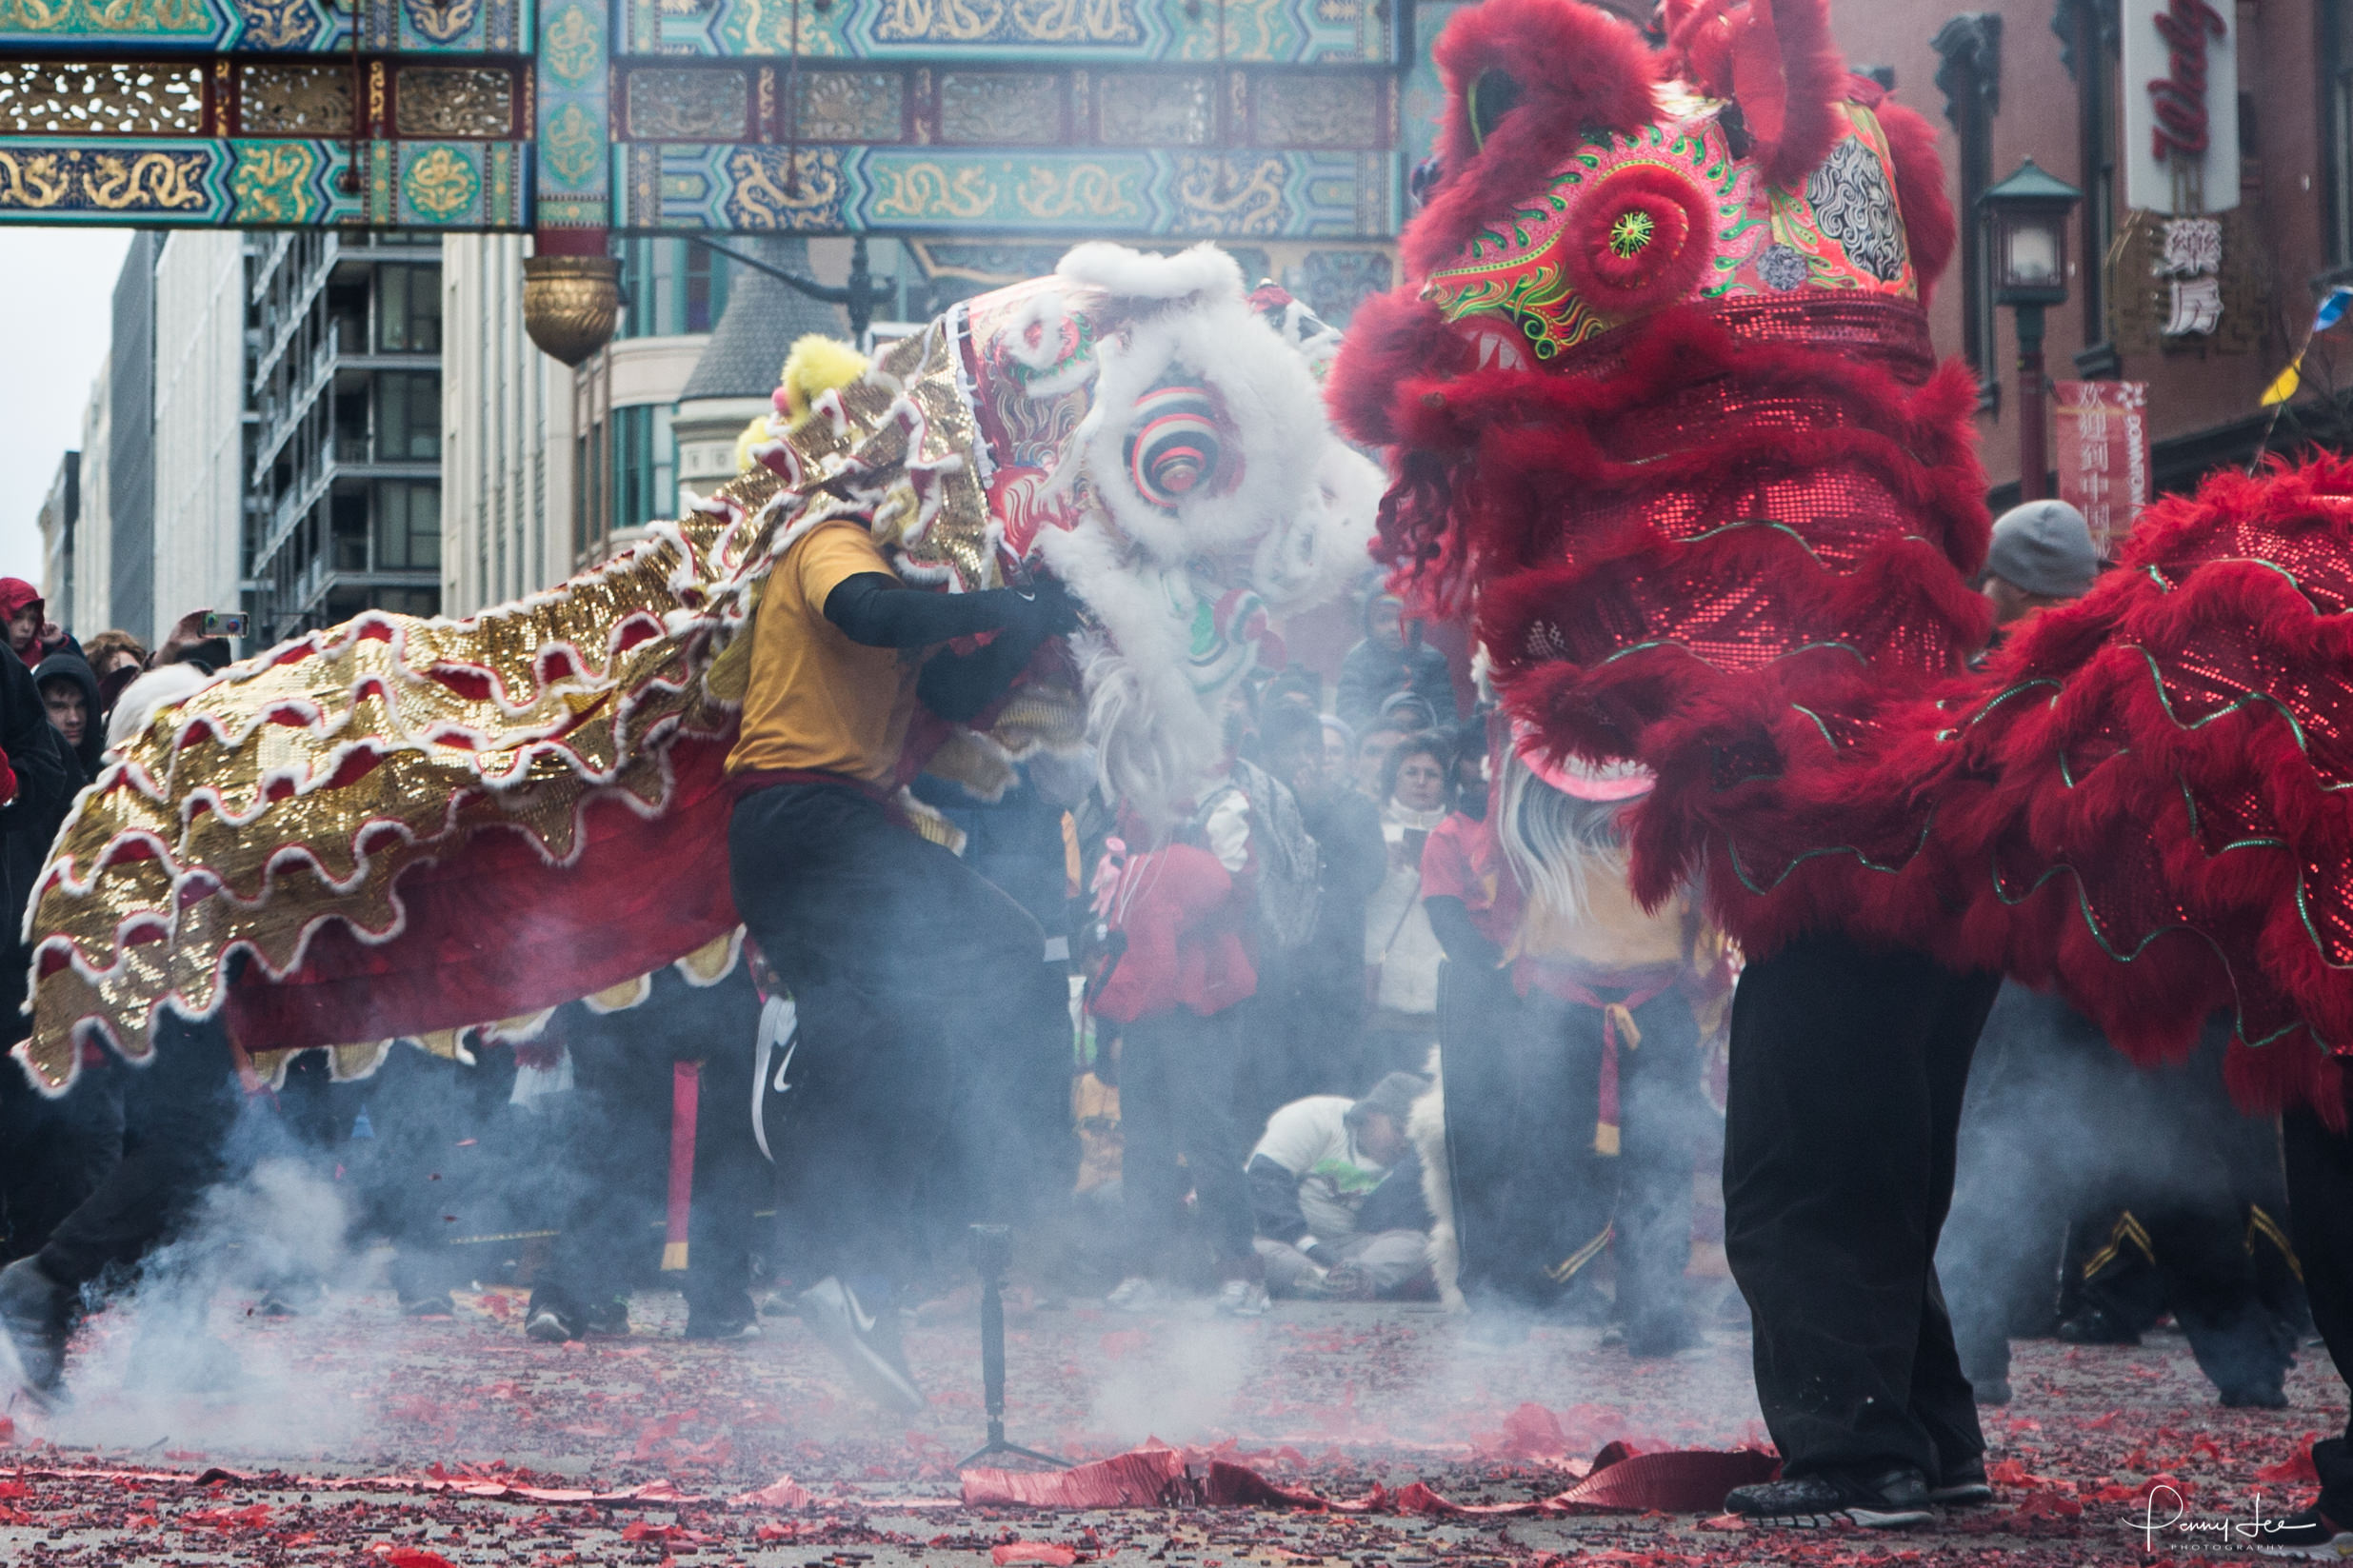 2019 DC Chinese New Year Parade in Chinatown, Washington DC2471 x 1647